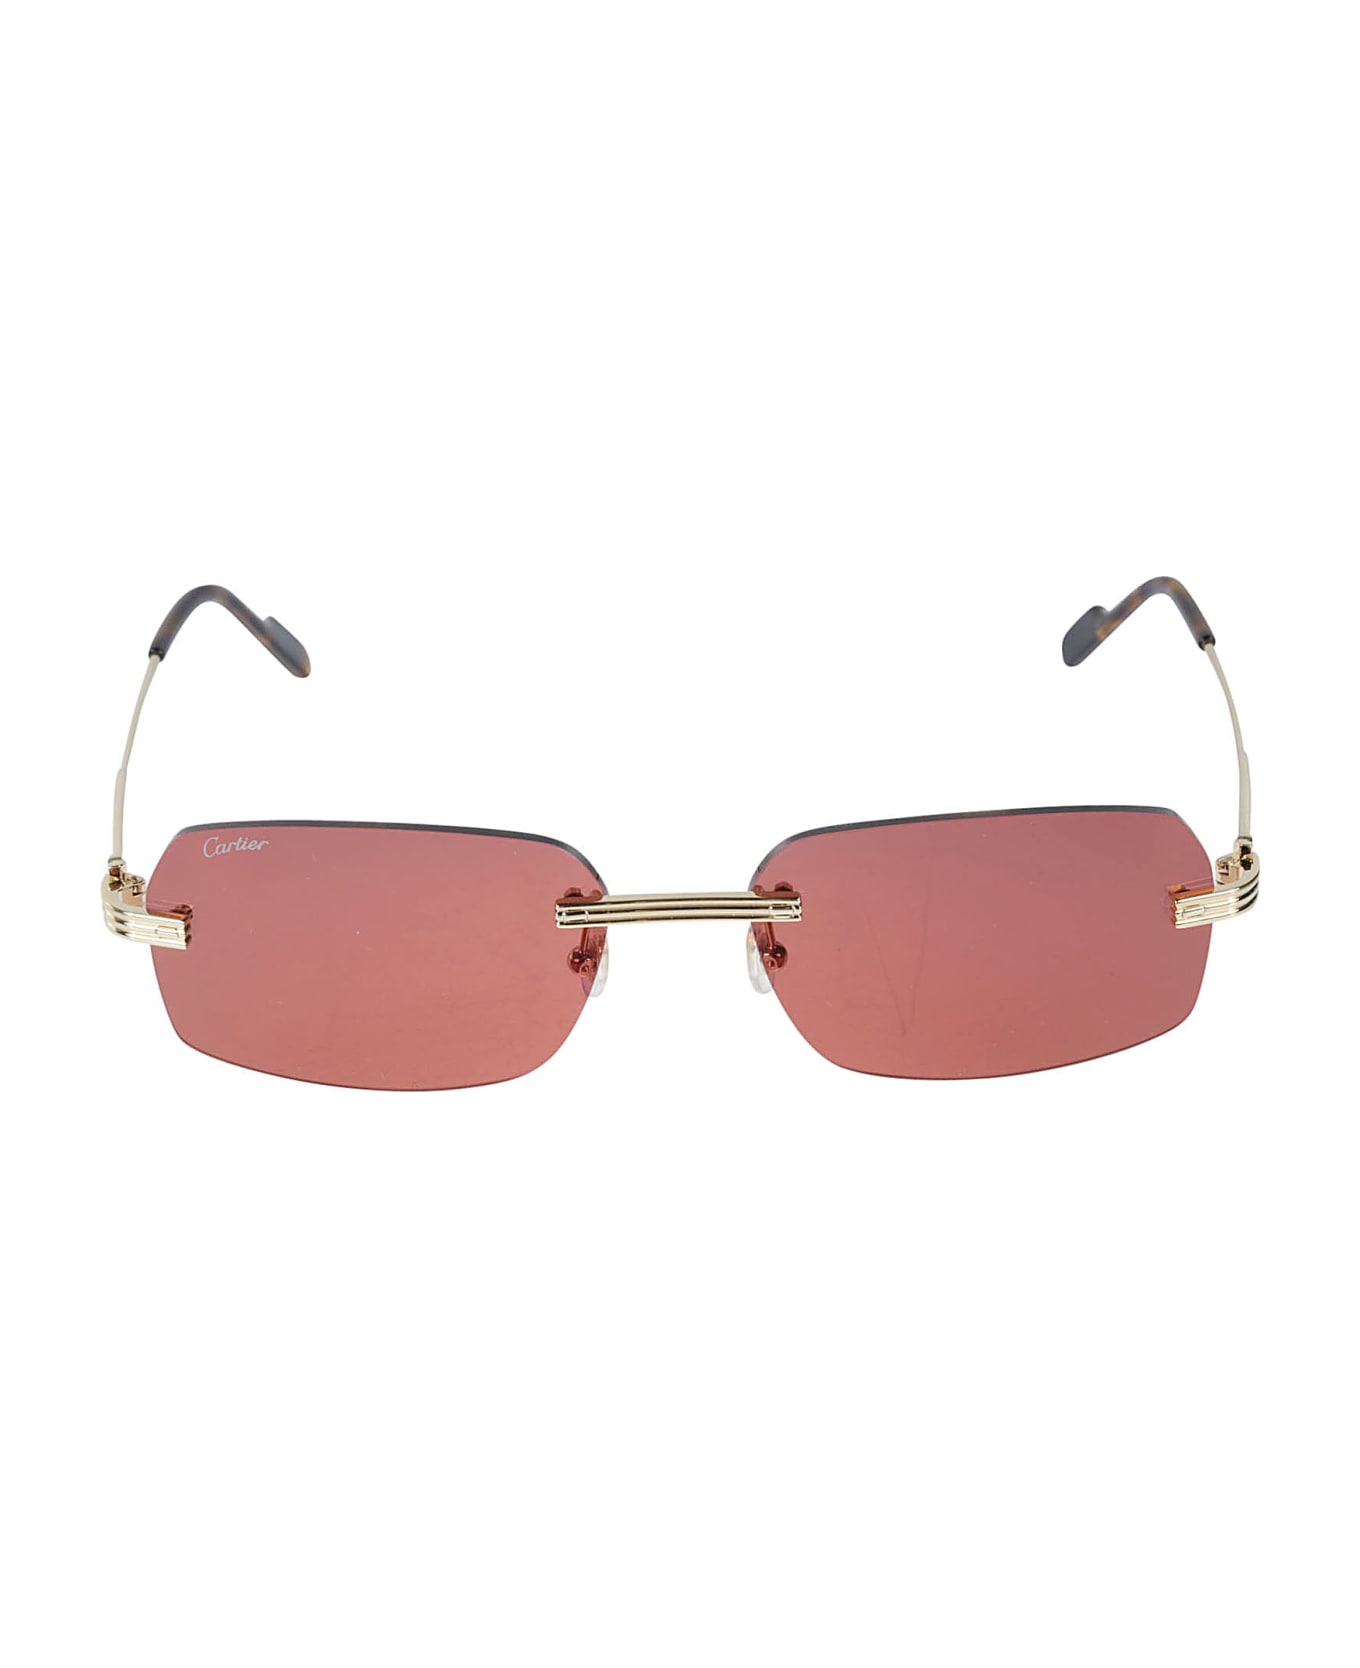 Cartier Eyewear Square Sunglasses - Gold